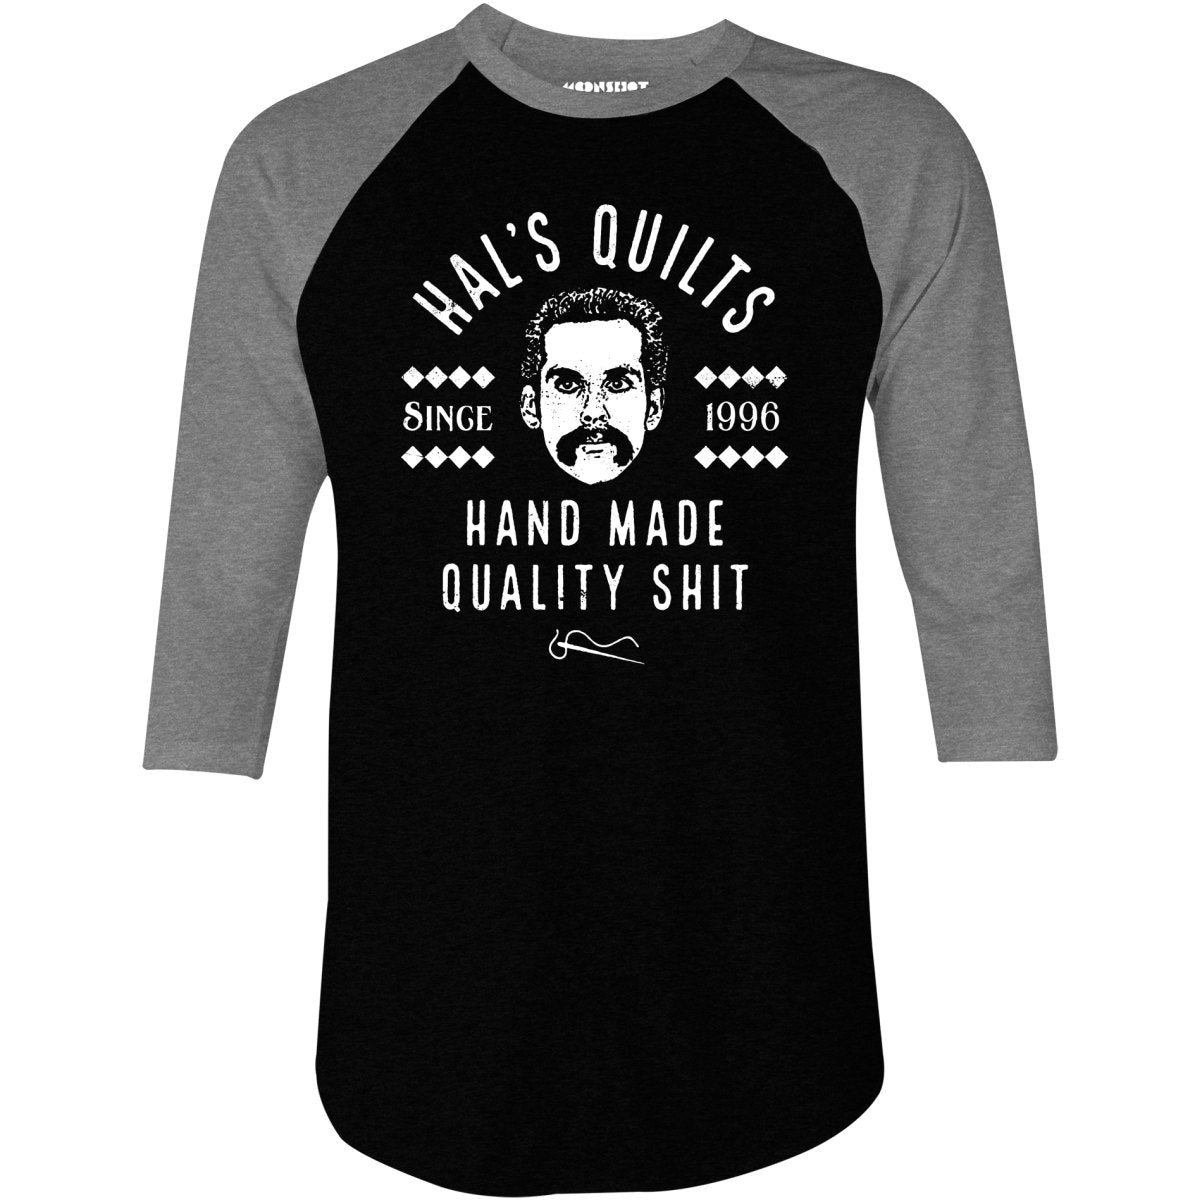 Hal's Quilts - 3/4 Sleeve Raglan T-Shirt